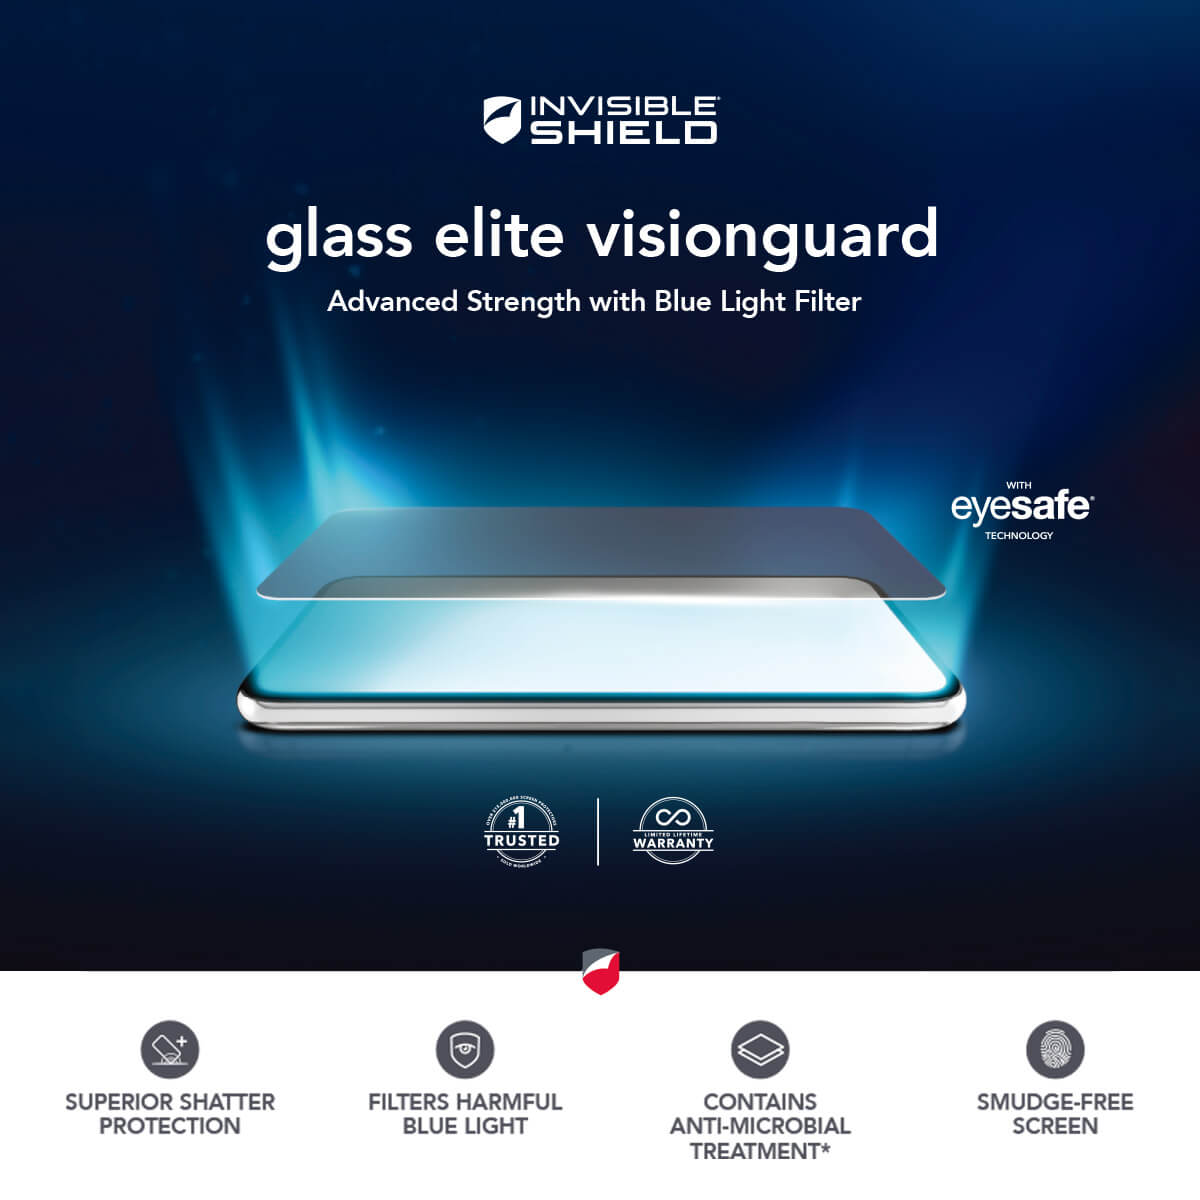 Zagg InvisibleShield iPhone 13 Mini Screen Protector Glass Elite VisionGuard